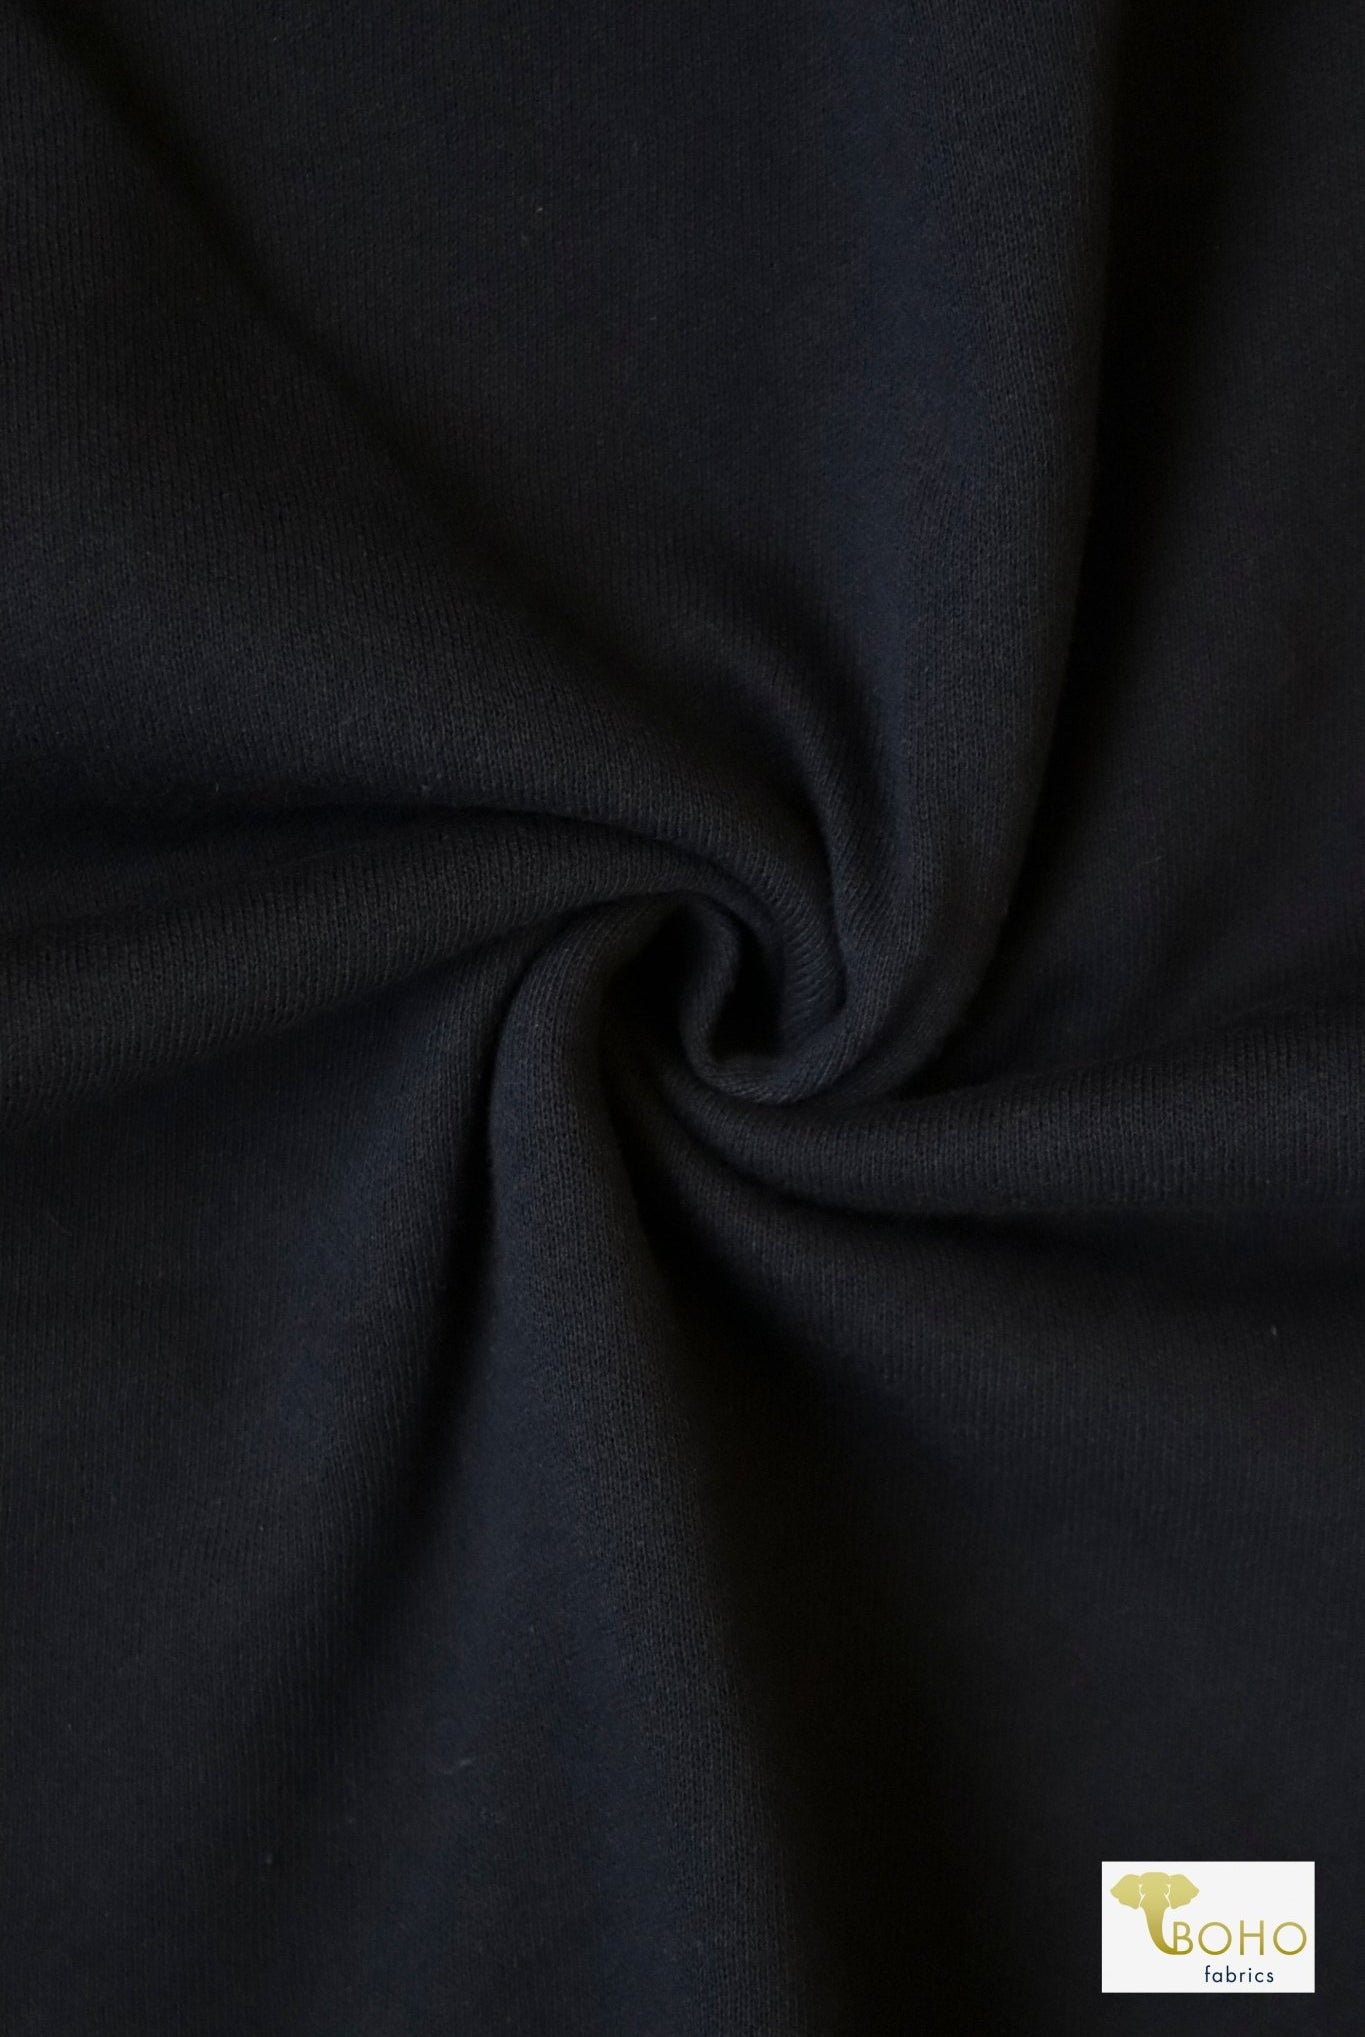 Black, Sweatshirt Fleece Fabric - Boho Fabrics